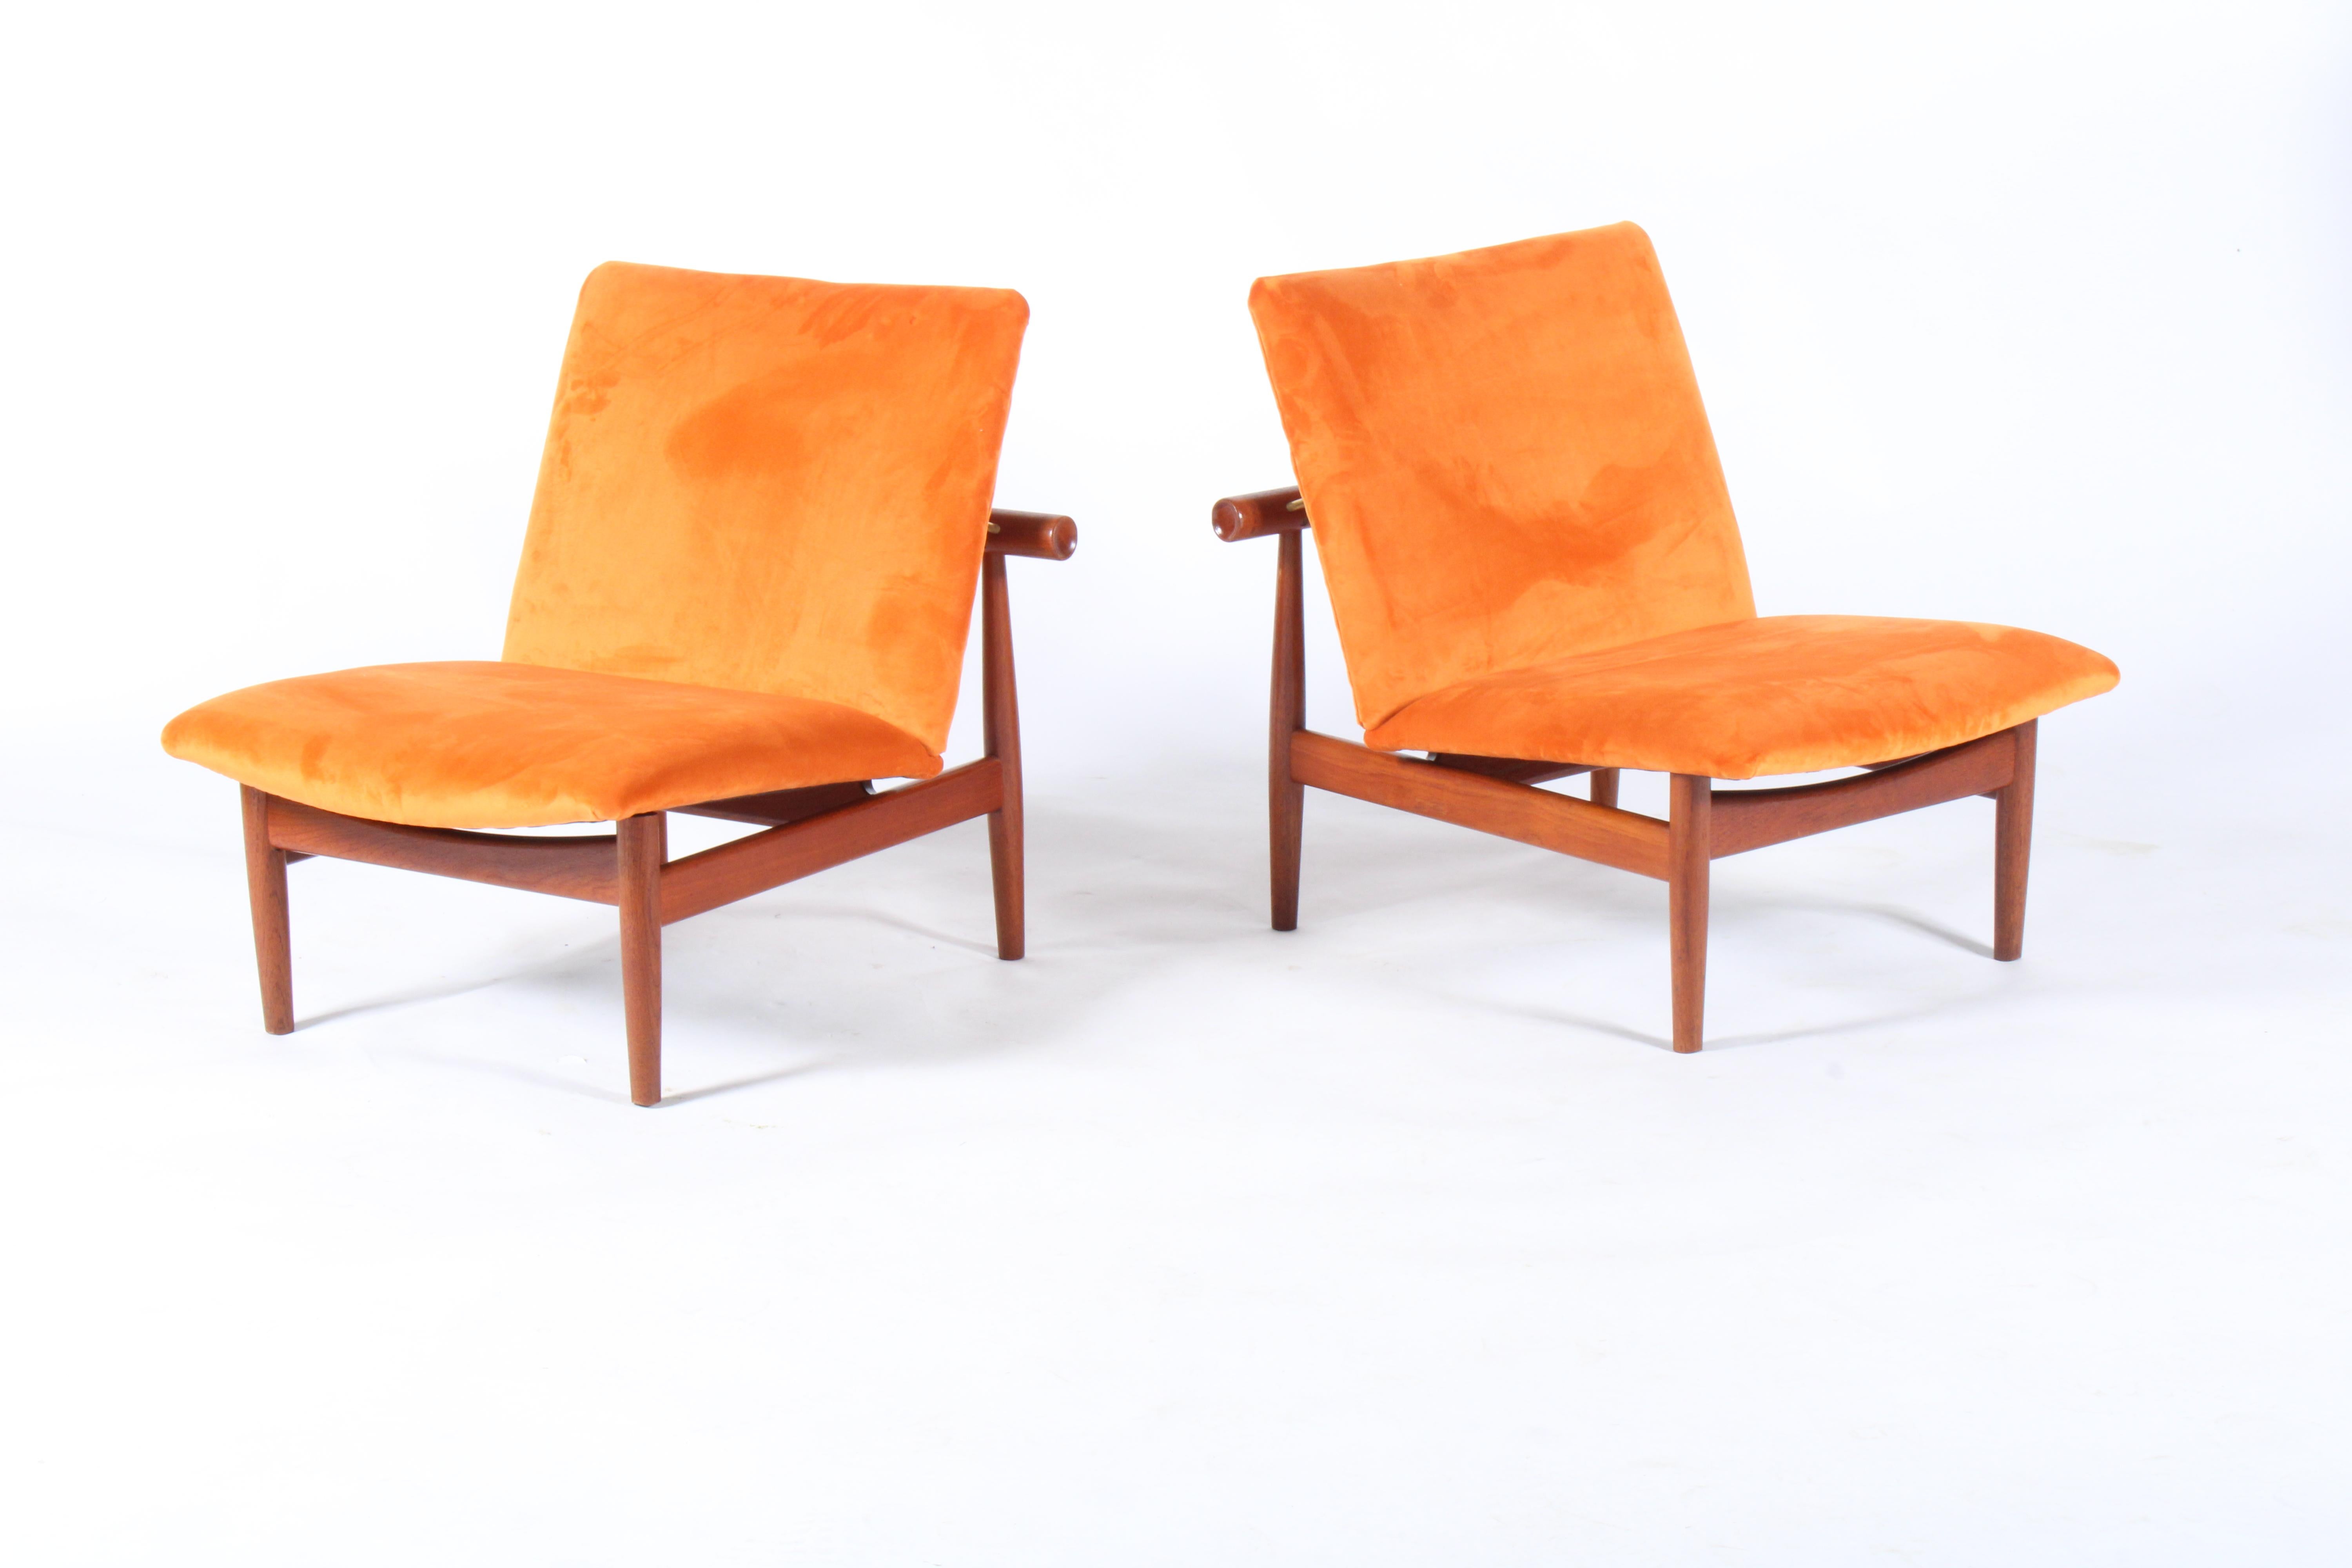 Mid-20th Century Pair of Iconic Danish Design Japan Chairs by Finn Juhl for France & Daverkosen